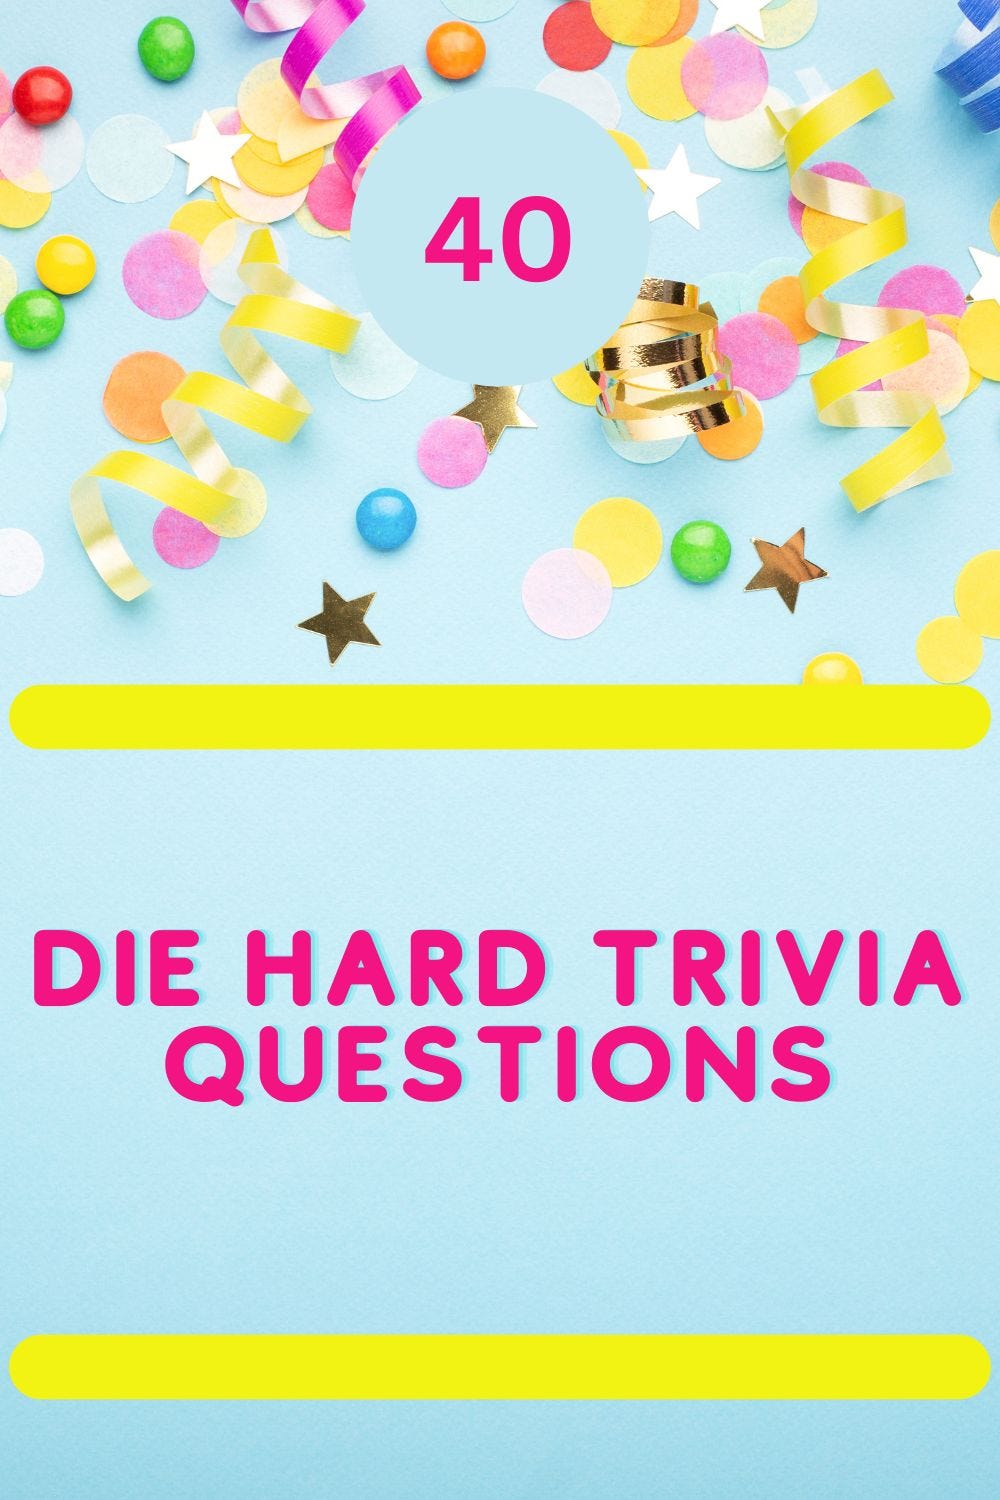 40 Die Hard Trivia Questions